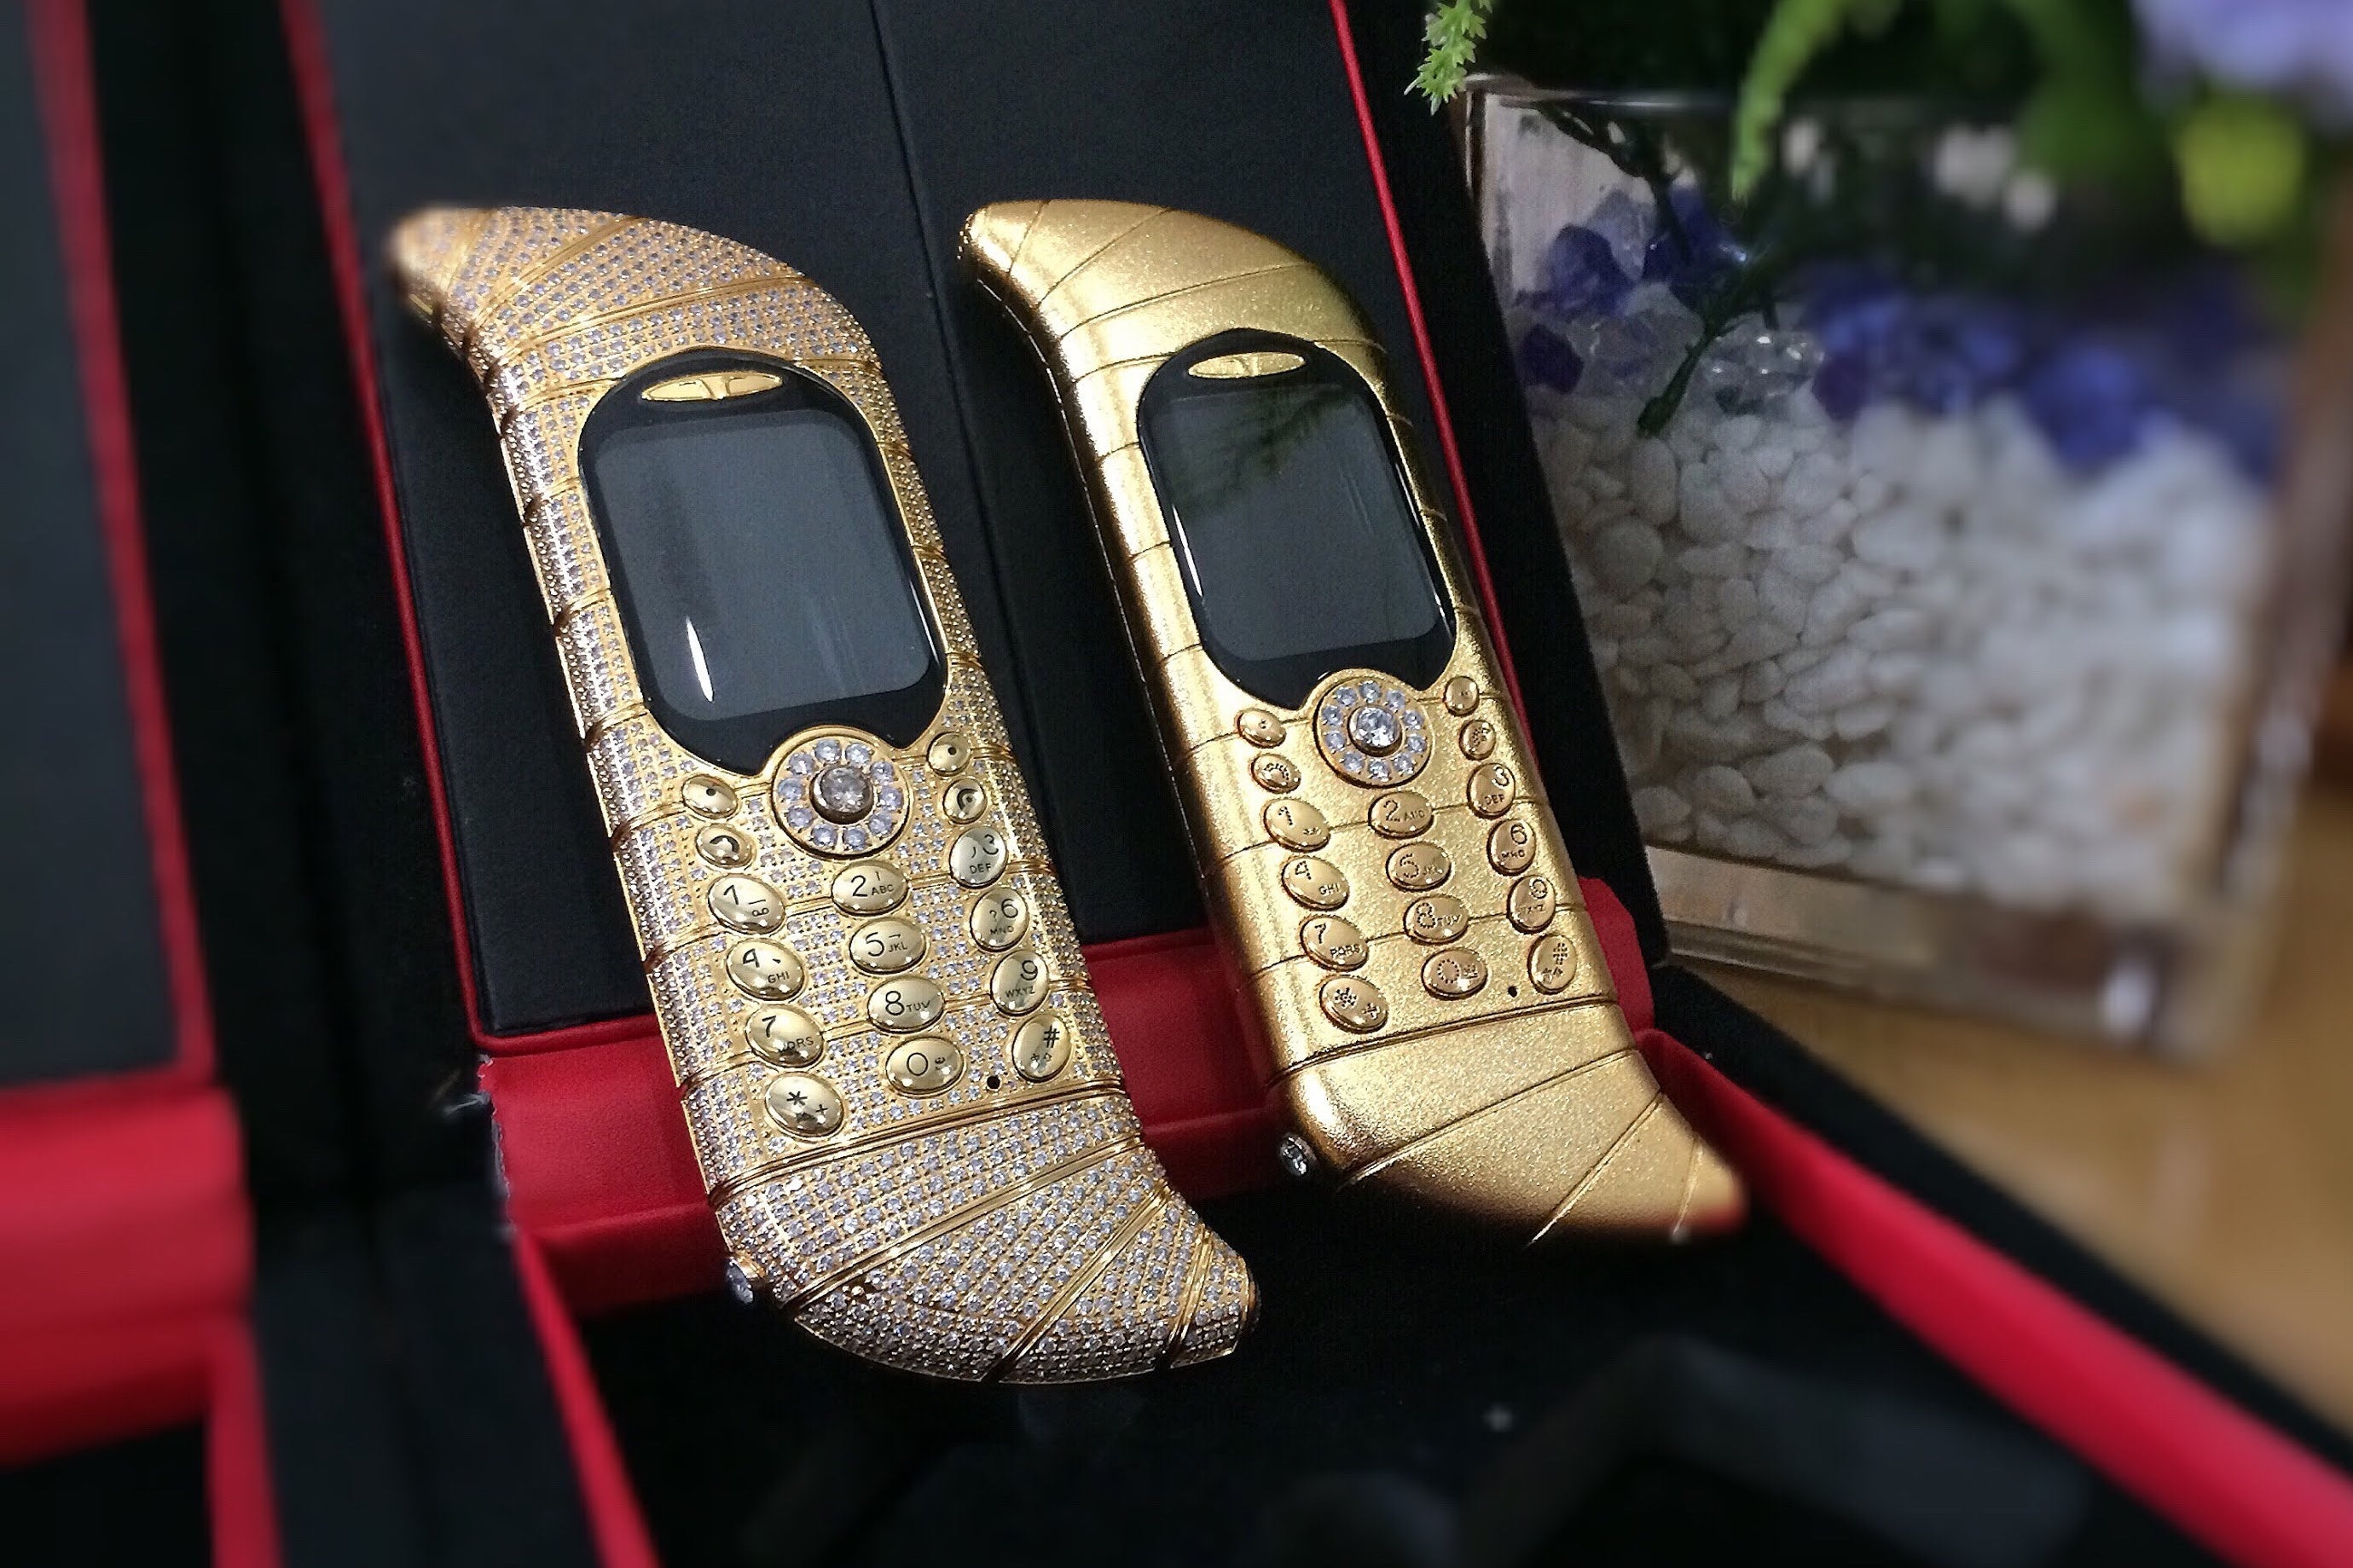 Two of the three Le Million phones on display - The million-dollar tilde-shaped dumb phone – Odd Phone Mondays